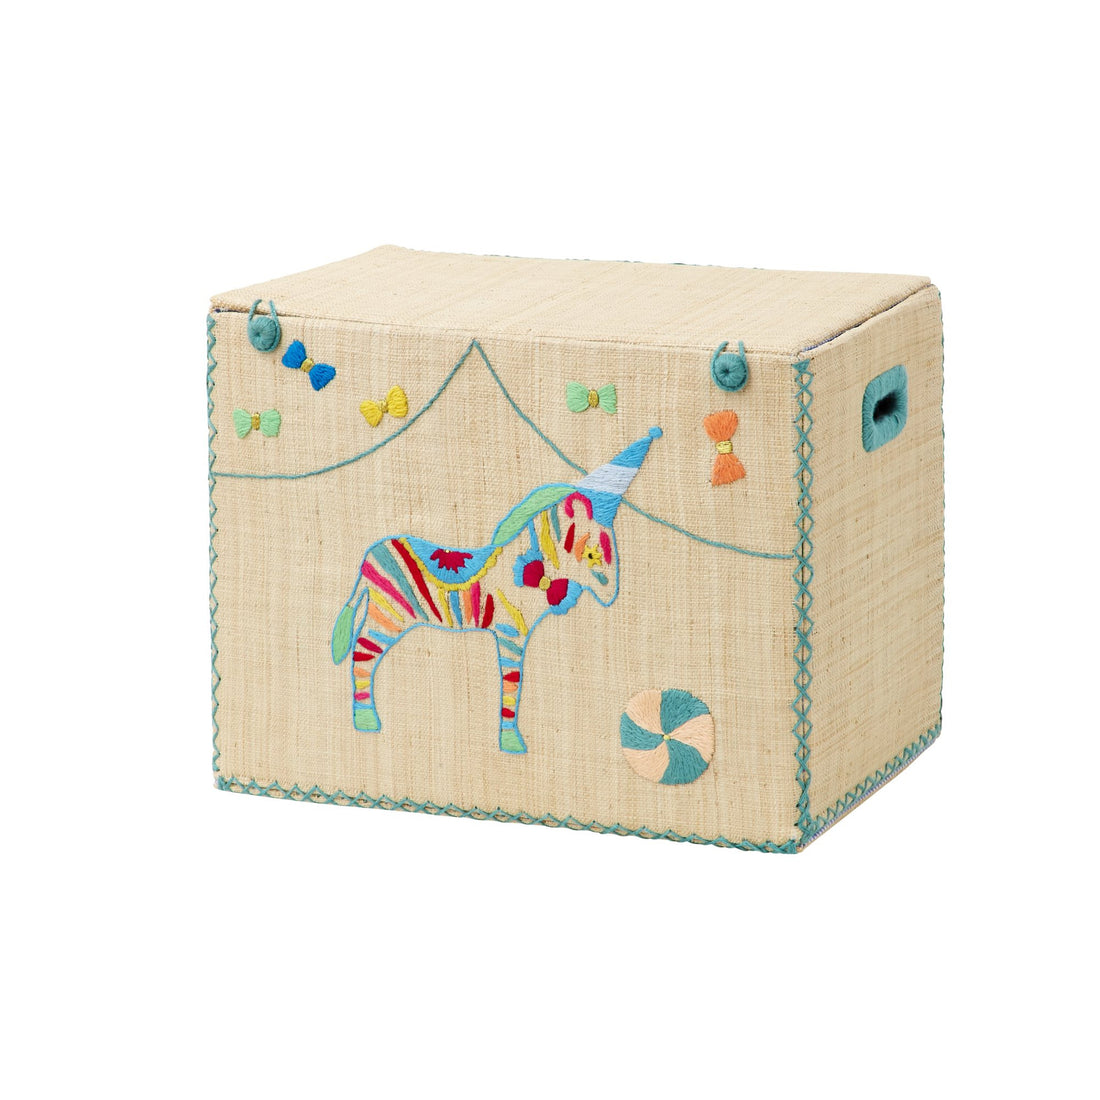 rice-dk-zebra-small-foldable-basket-in-circus-design-decor-storage-bshou-scirc-01